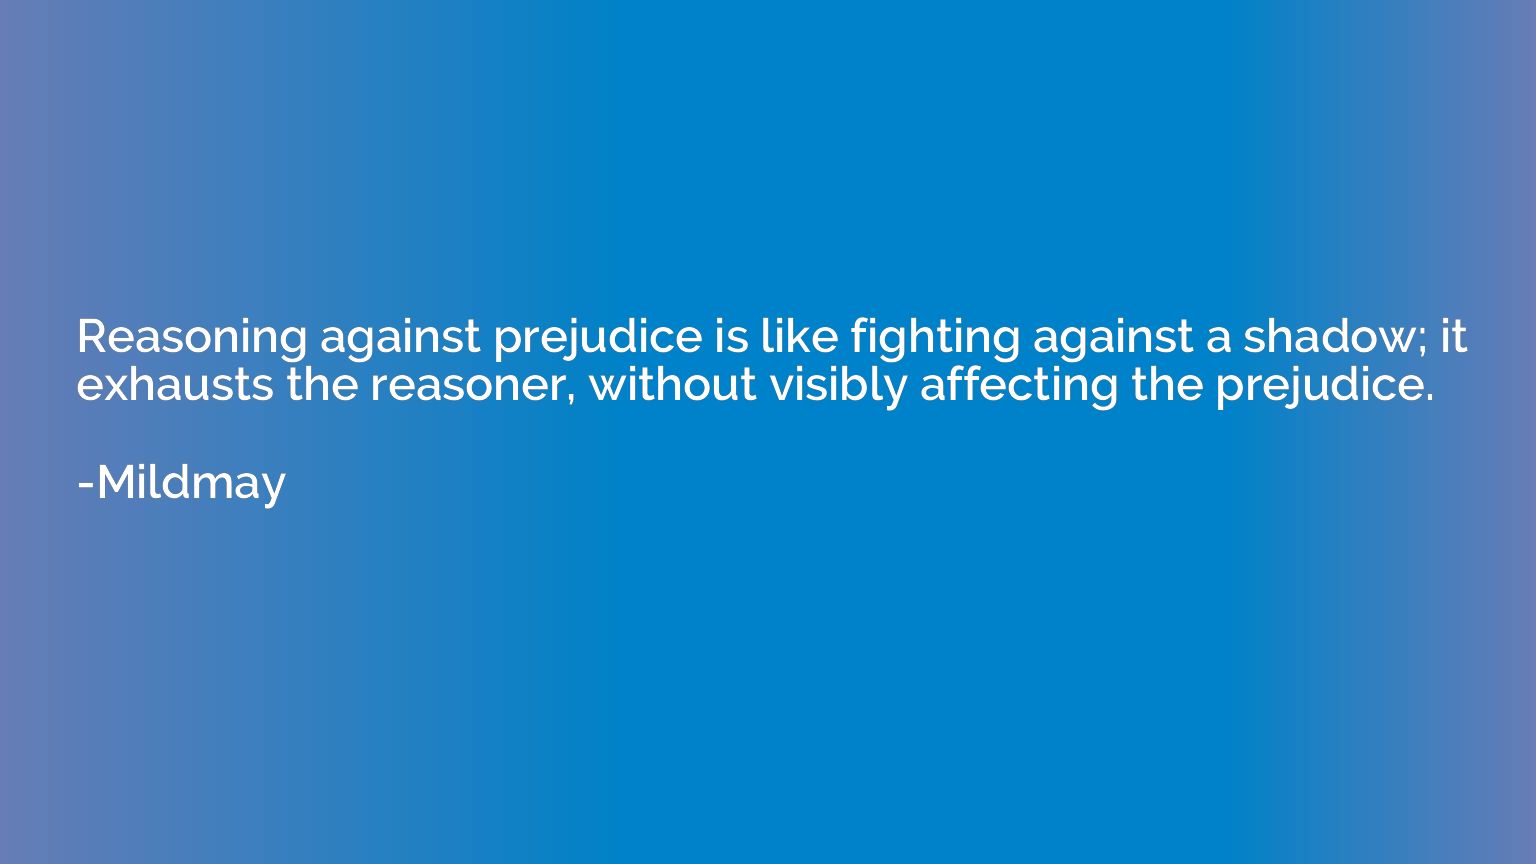 Reasoning against prejudice is like fighting against a shado